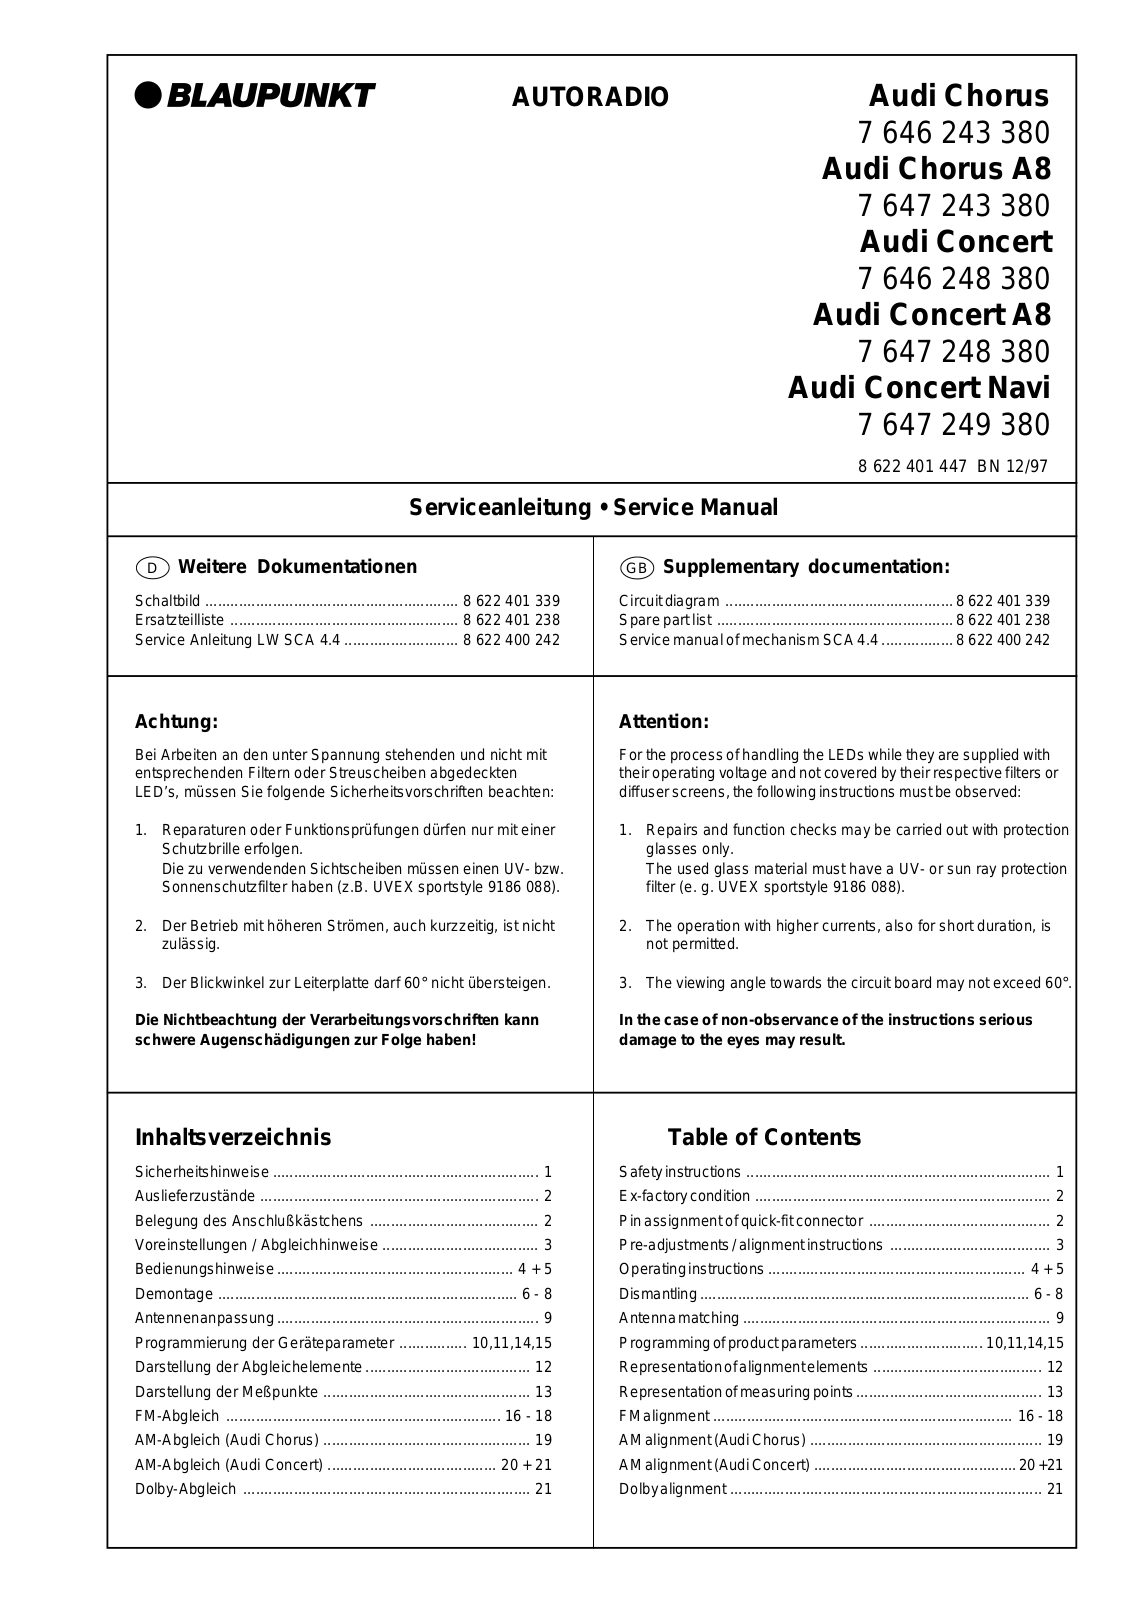 BLAUPUNKT AUDI CHORUS CONCERT, Audi Co Service Manual